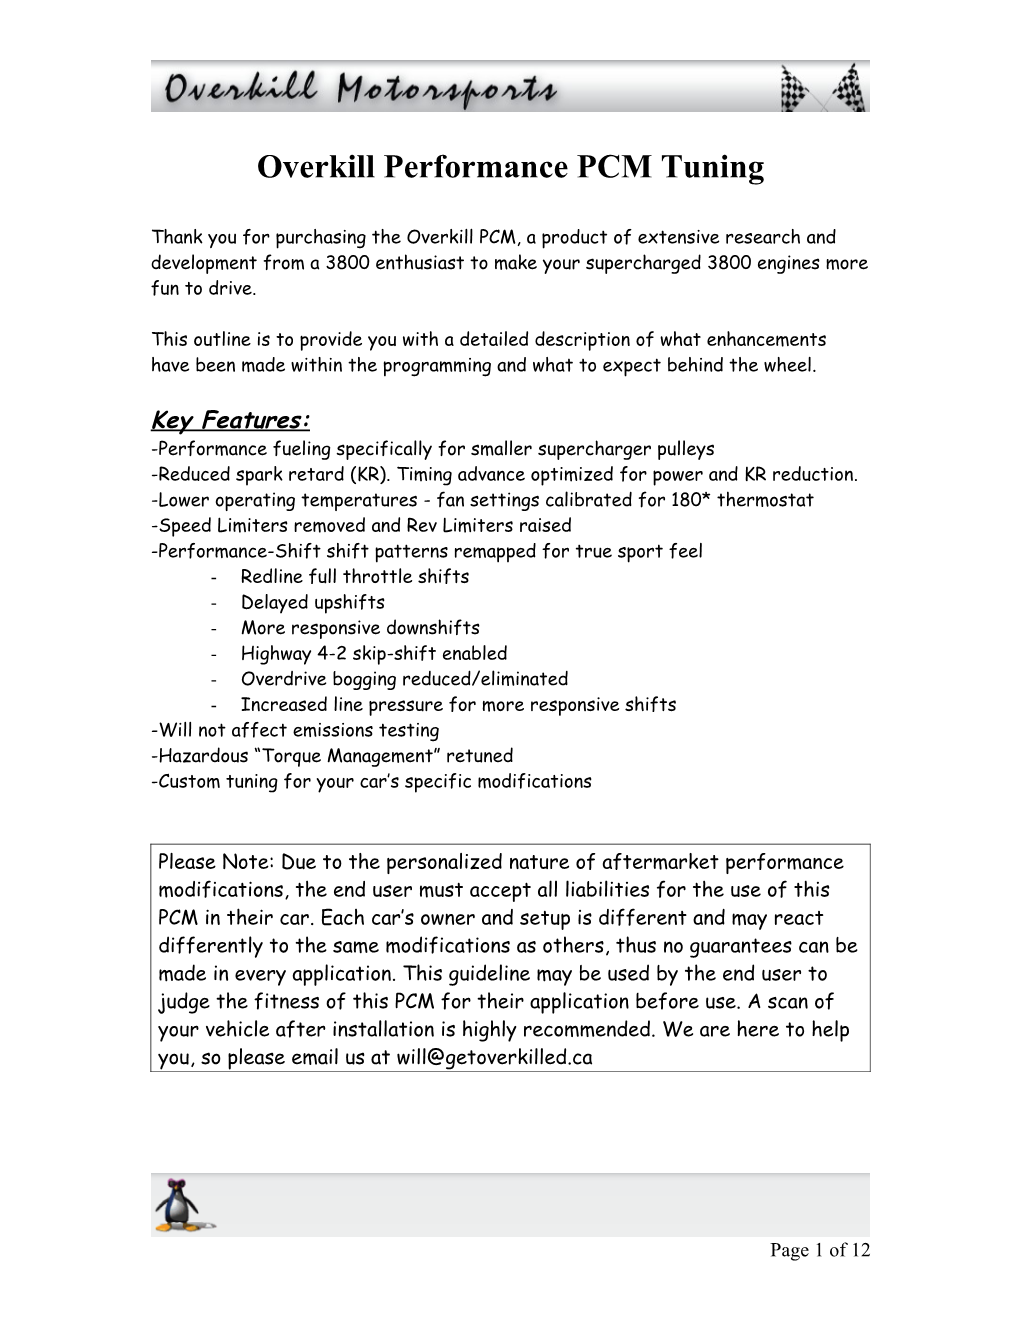 Overkill PCM Tuning